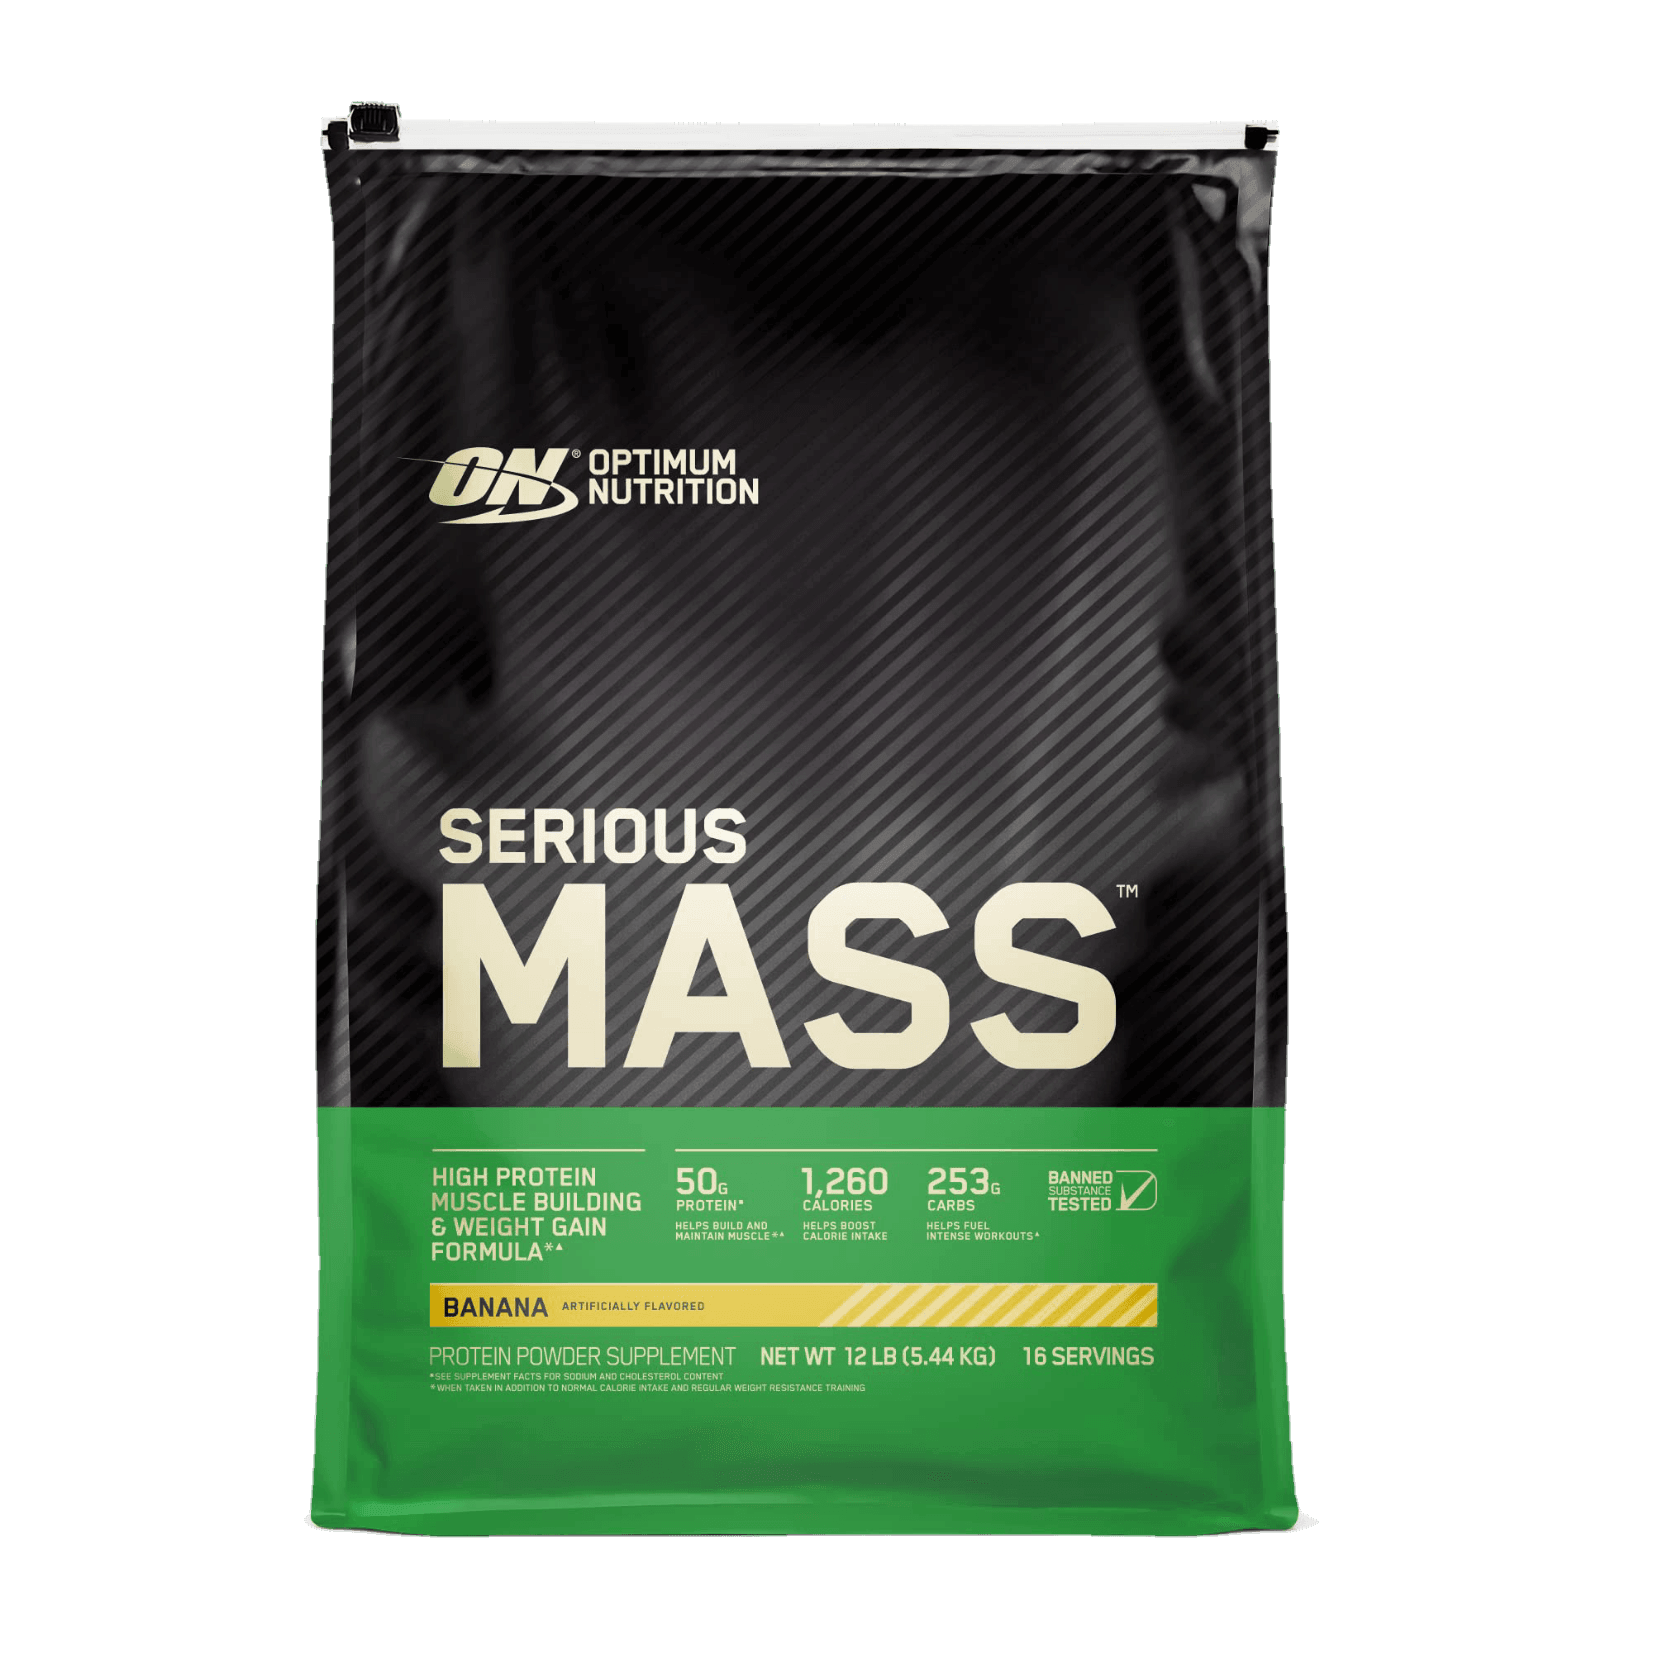 Optimum Nutrition Serious Mass - The Supplements Factory